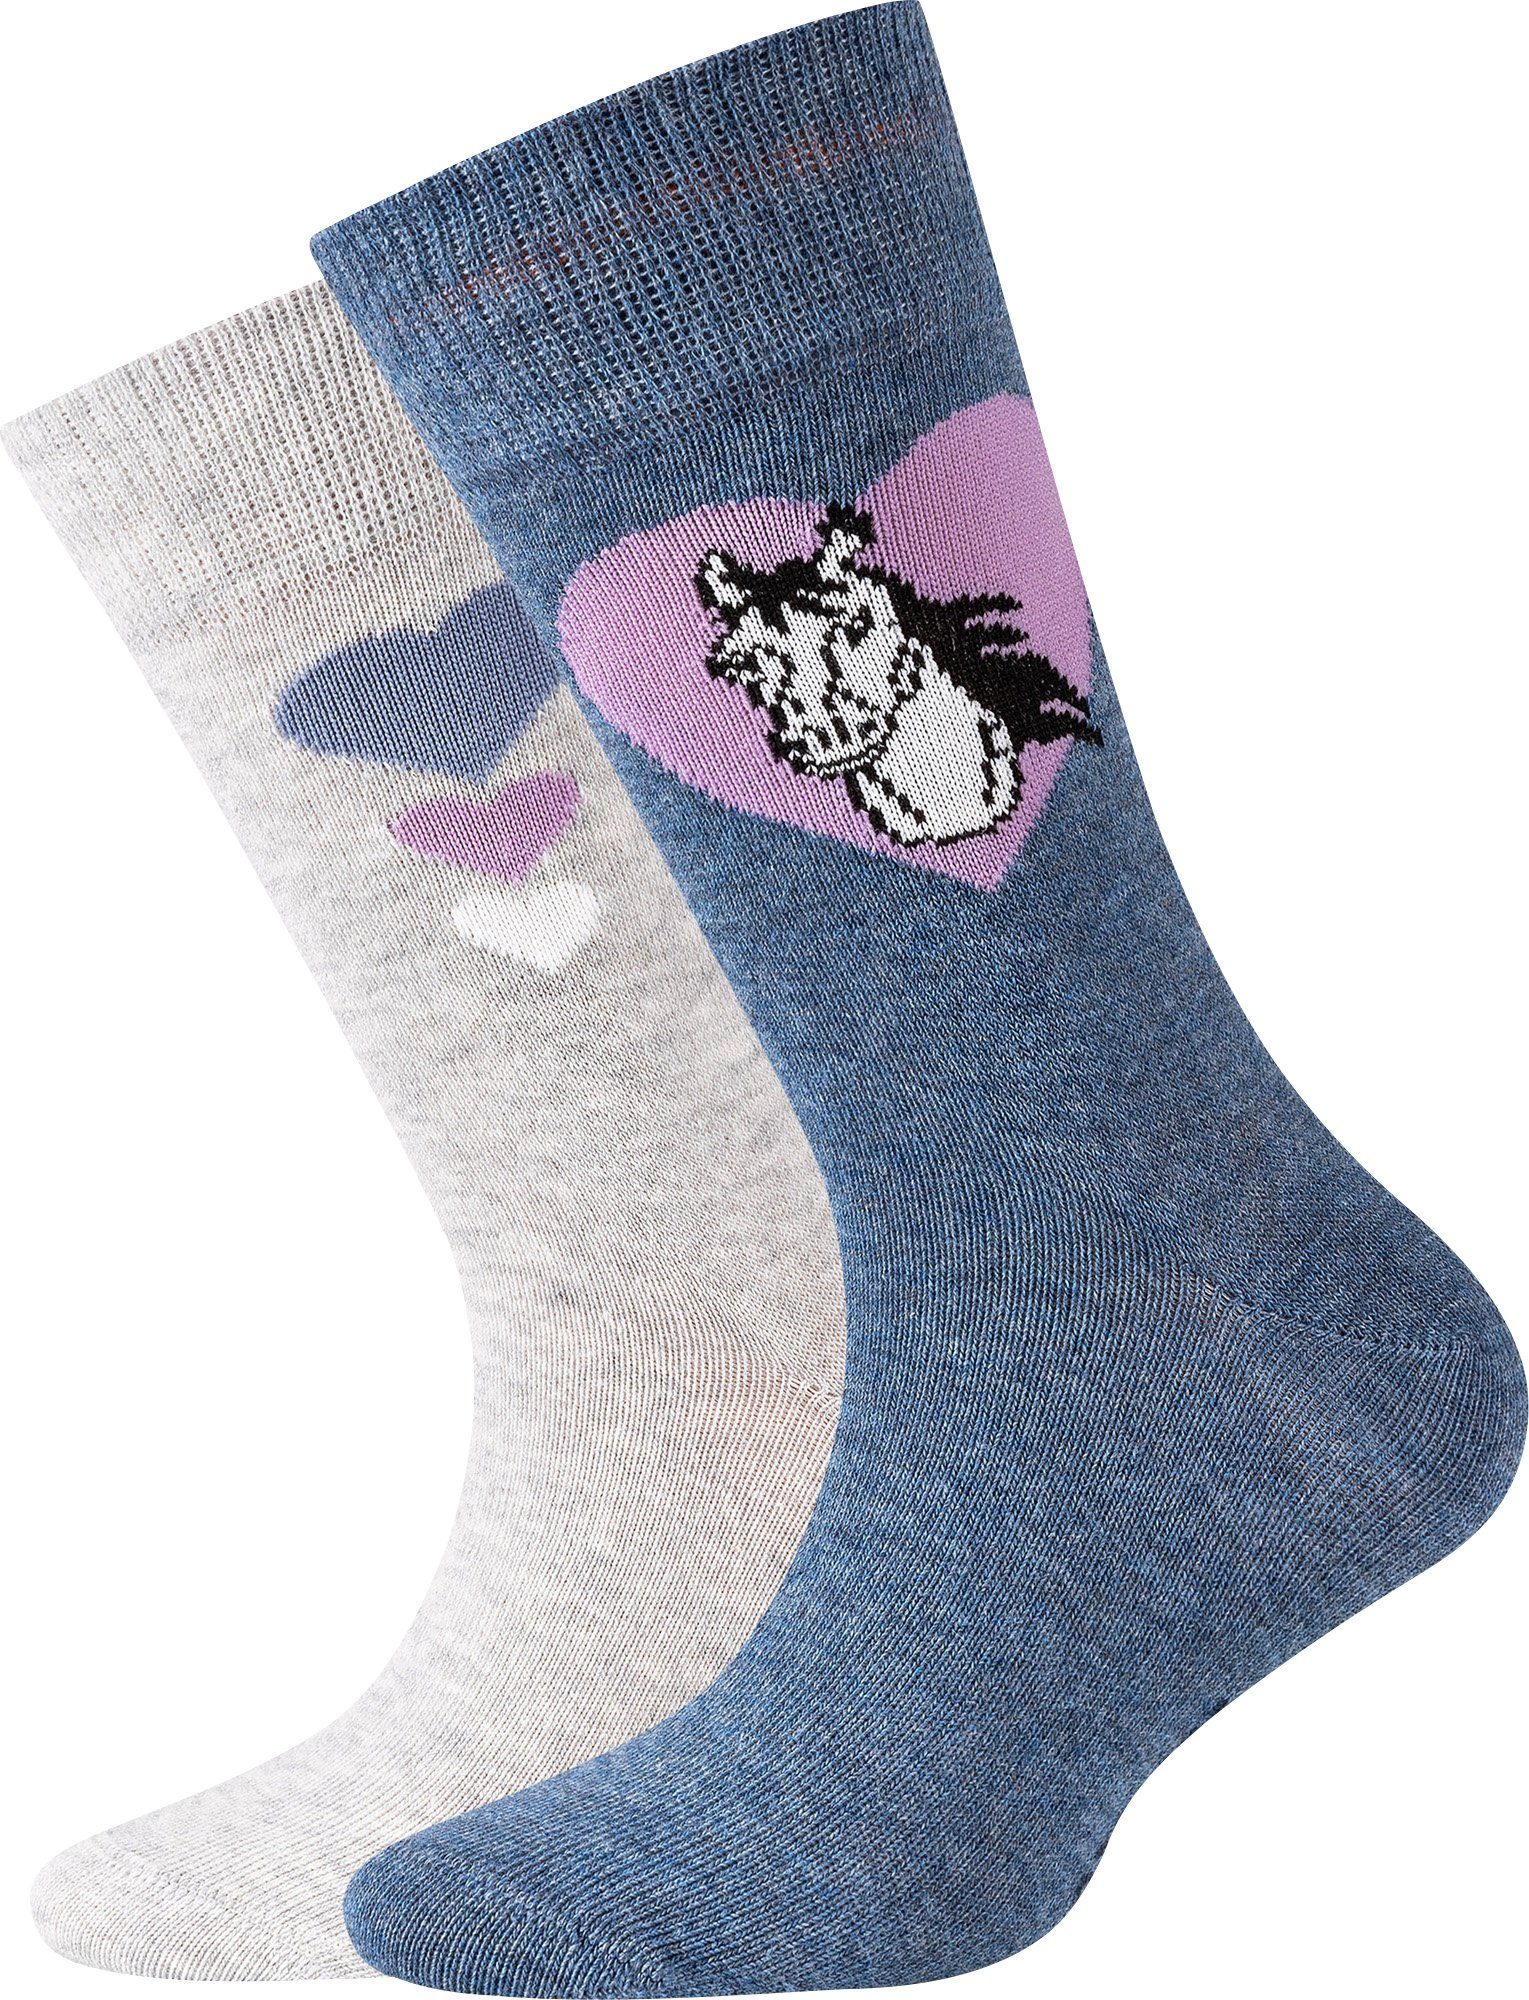 Kinder-Socken Motiv: 2 jeansblau/hellgrau Paar Socken Pferd, Herzen meliert Camano